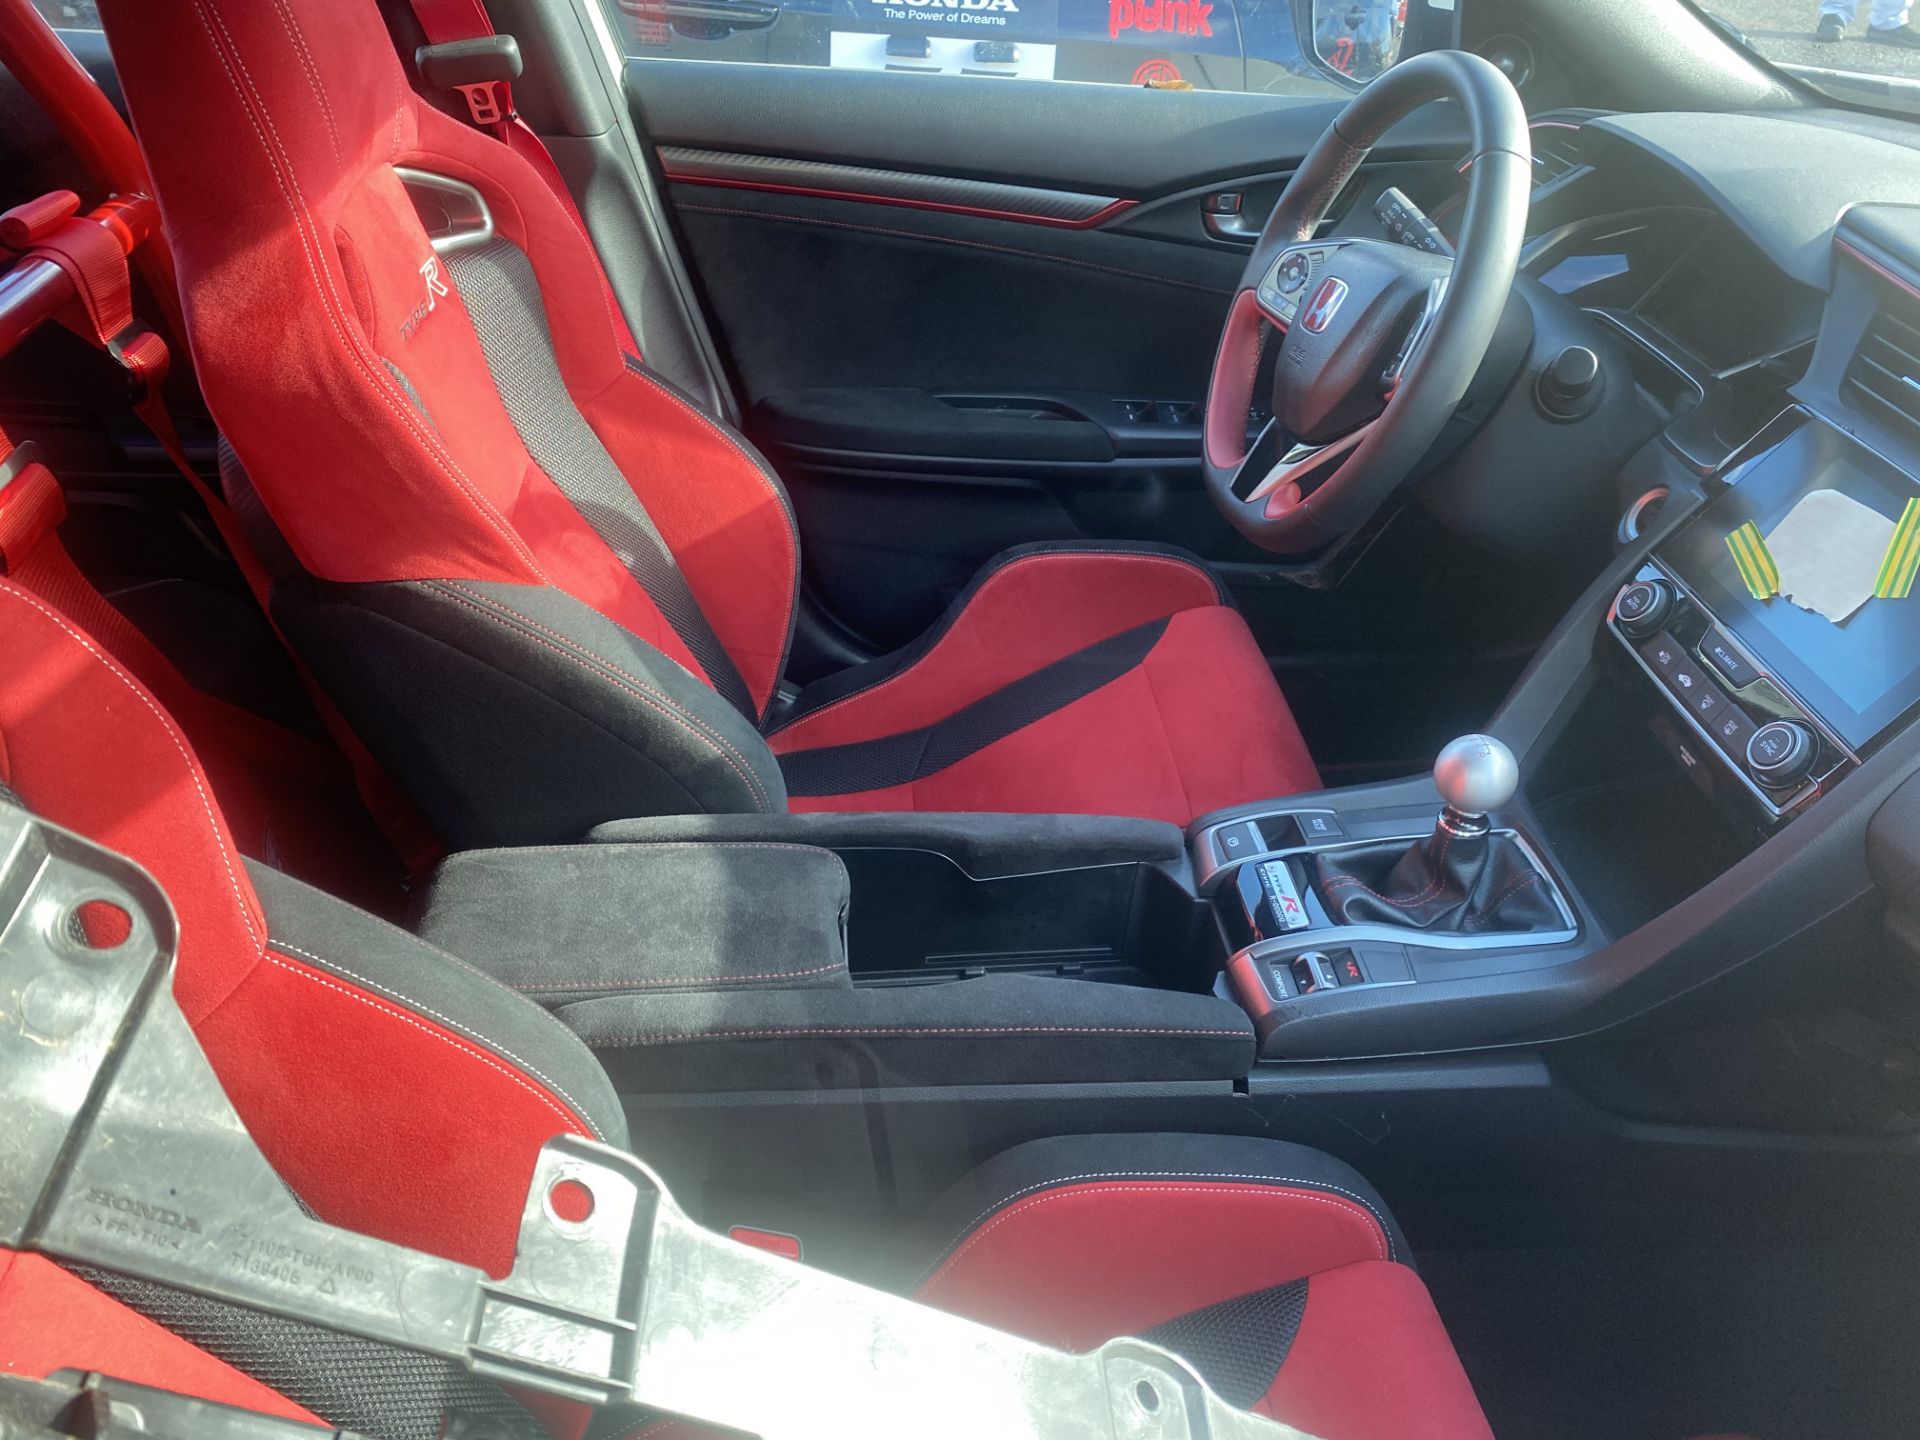 Honda Civic FK8 type R left hand drive race car, White paint finish, 2017 build, standard Type R - Image 11 of 21